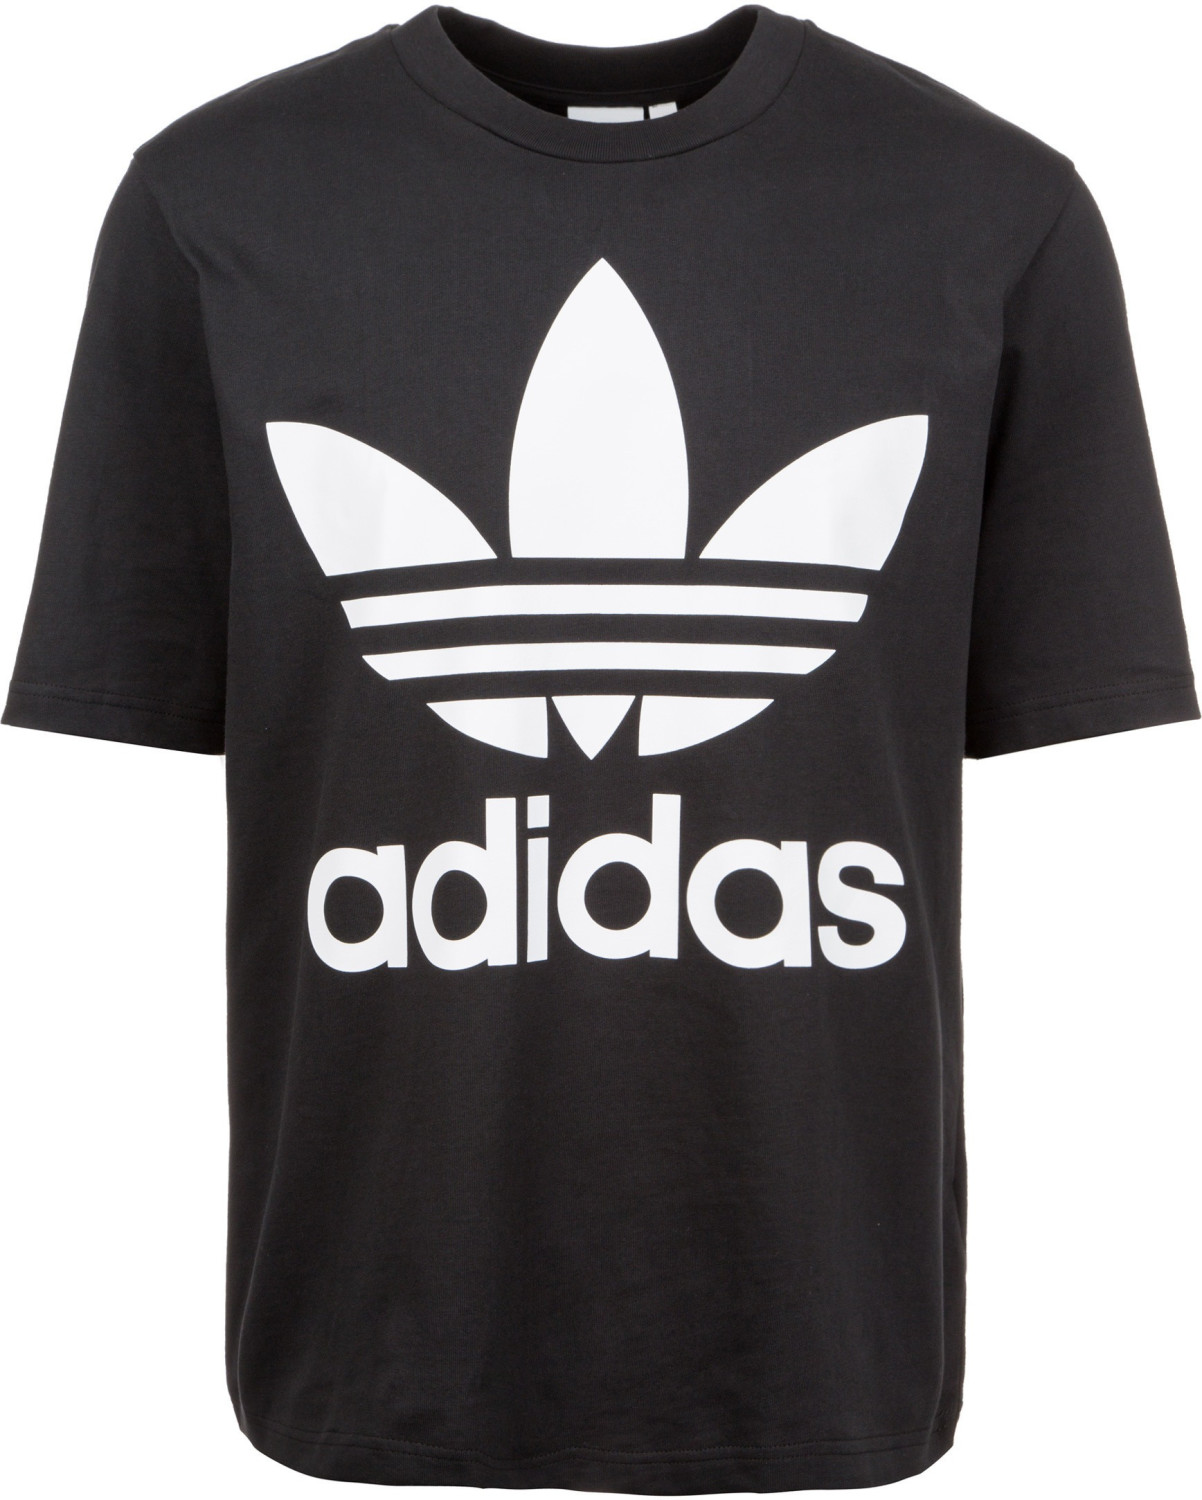 Adidas Originals Oversize Trefoil T-Shirt black